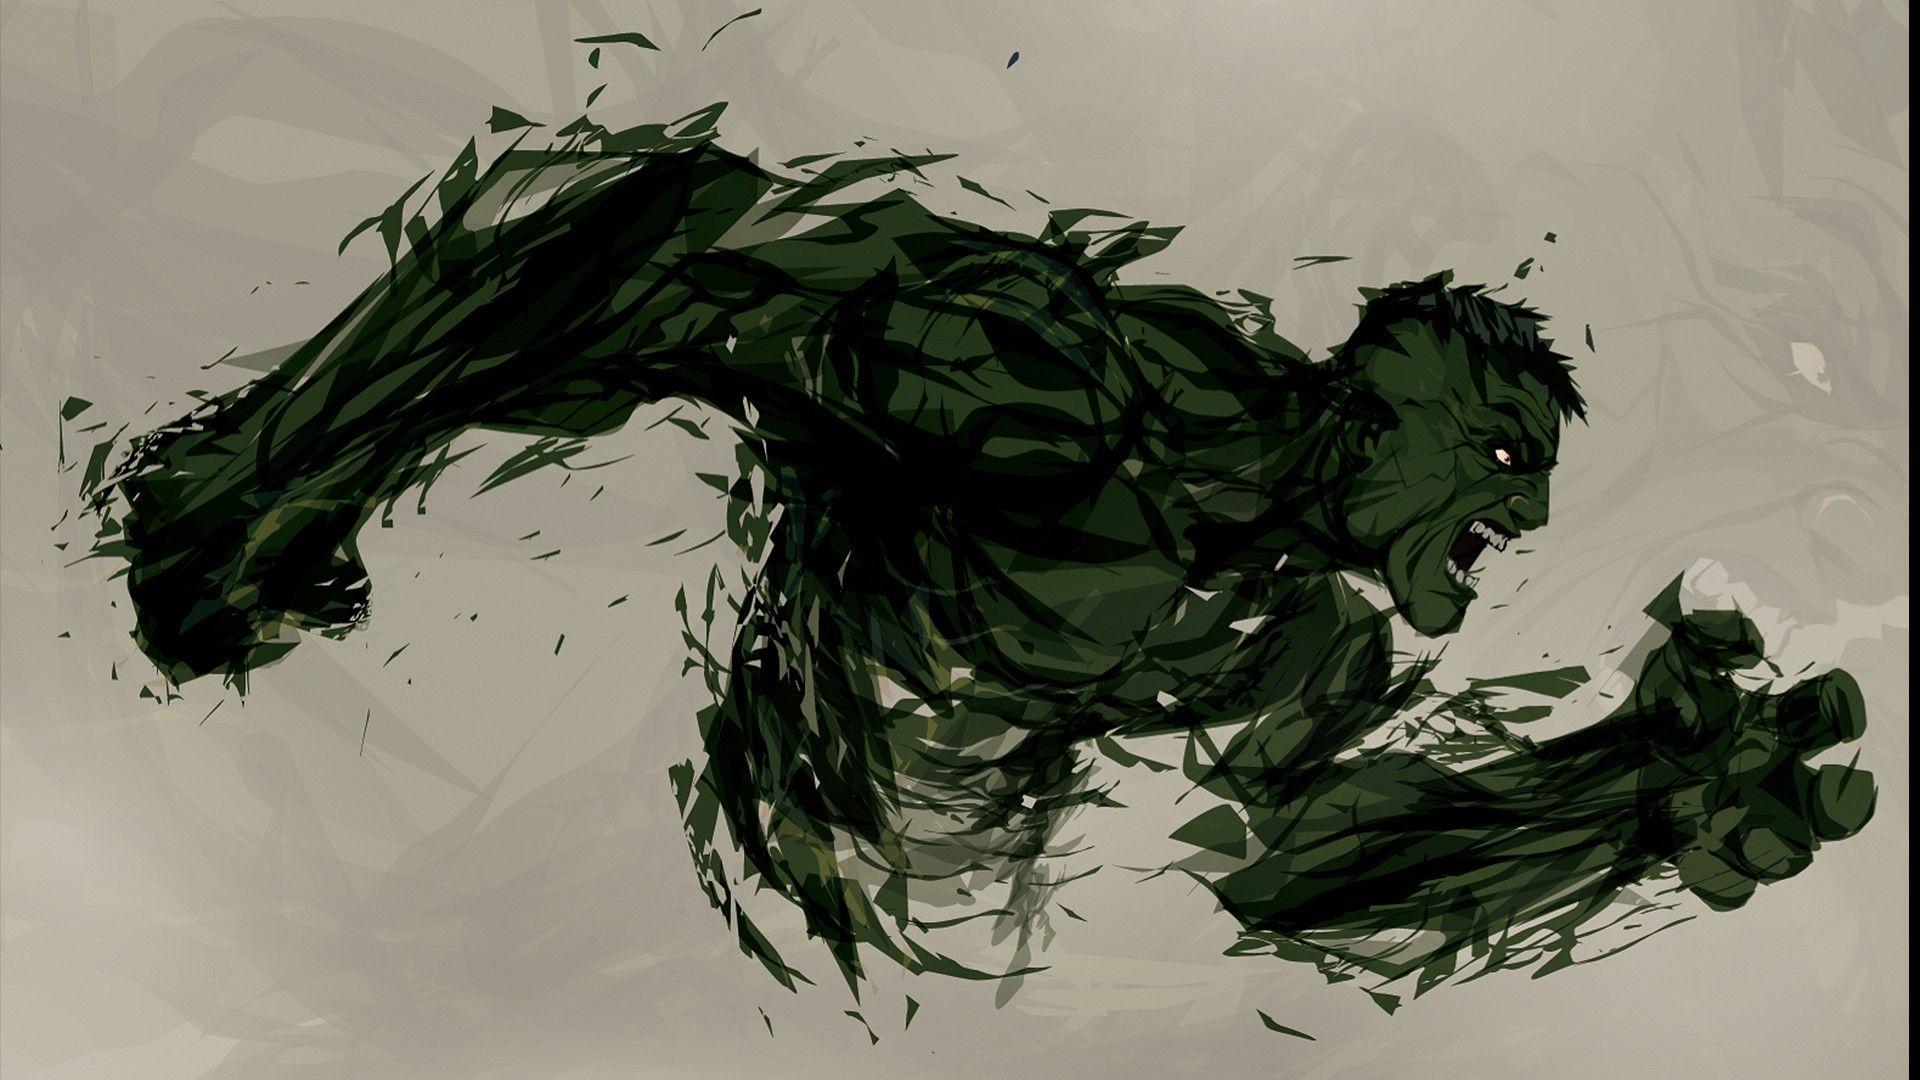 Hulk Wallpaper HD. Wallpaper, Background, Image, Art Photo